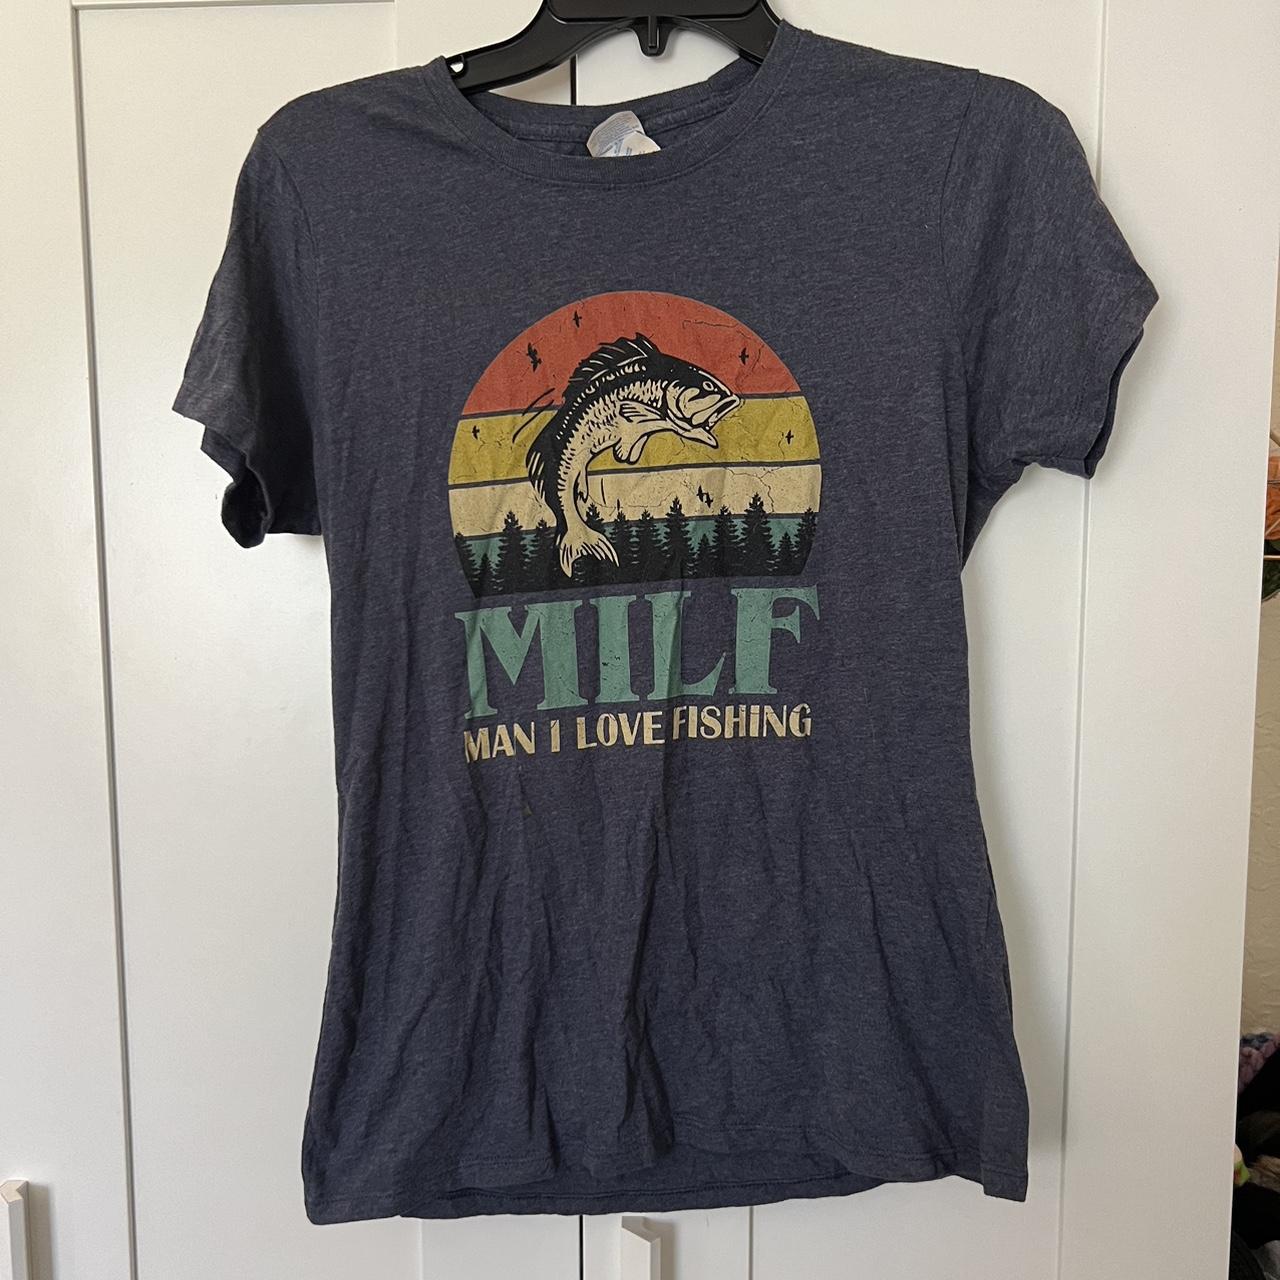 Man I love fishing milf t-shirt - Depop